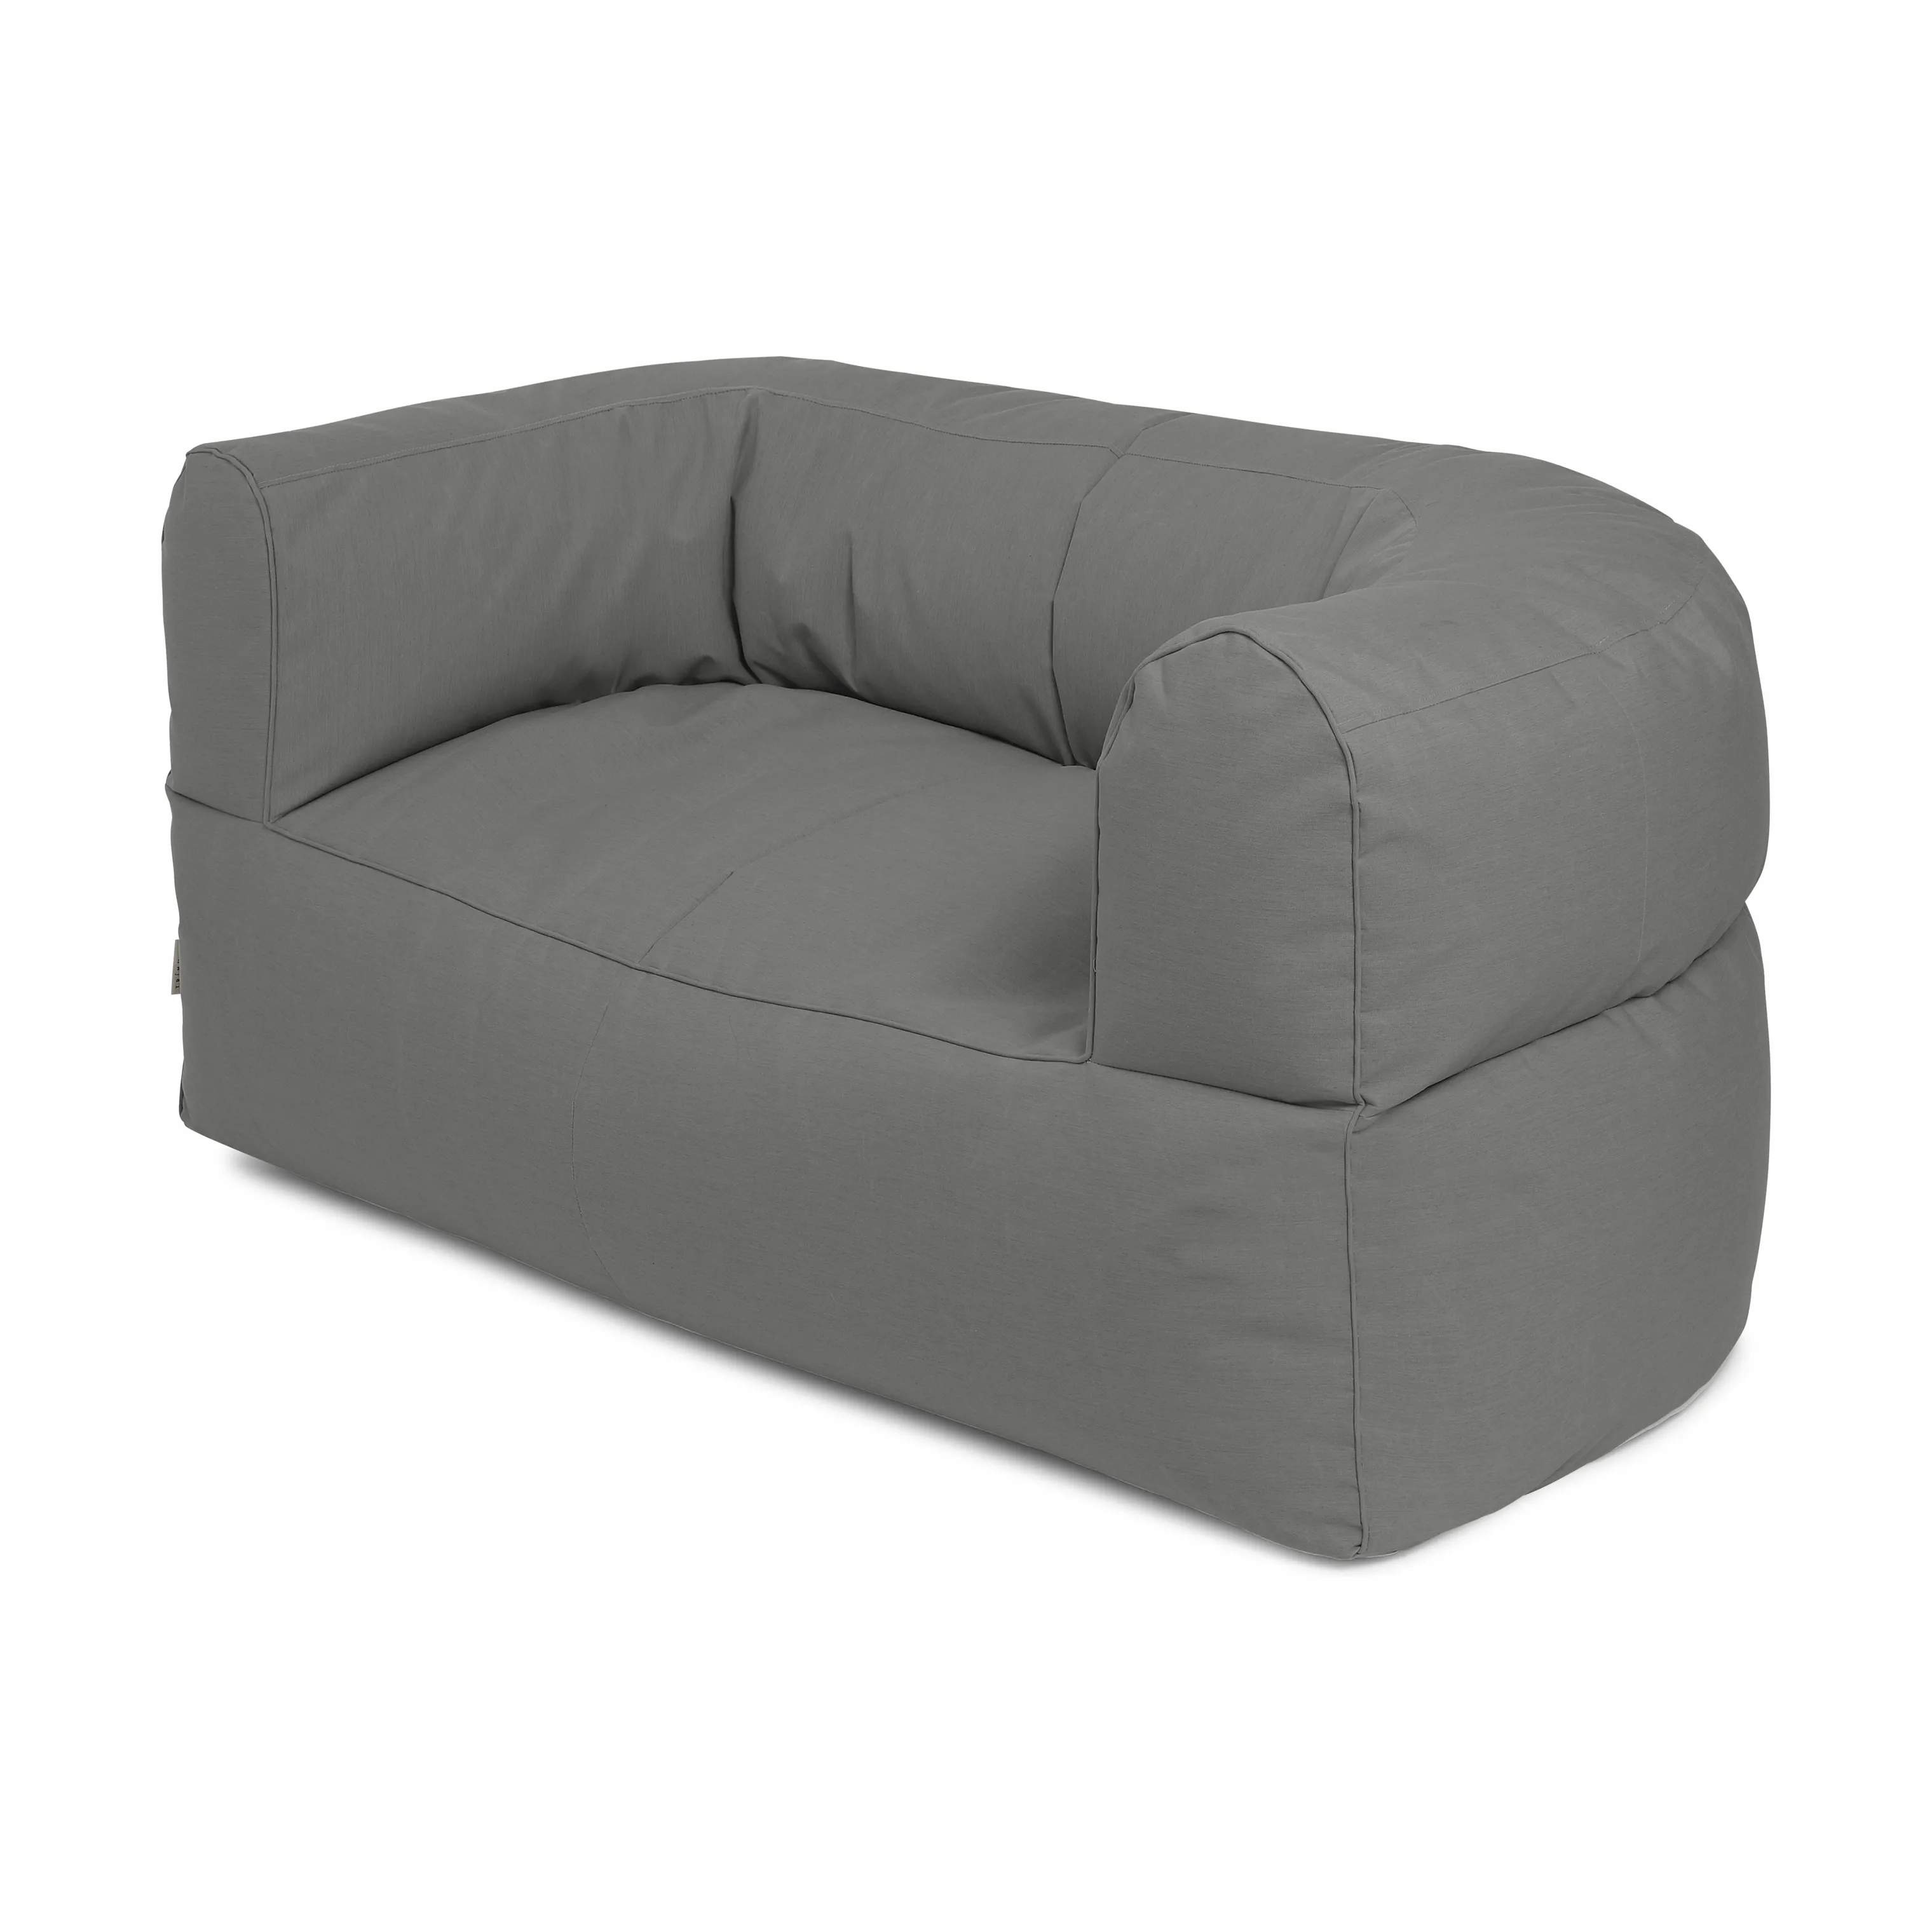 Arm-Strong Sofa, grey, large